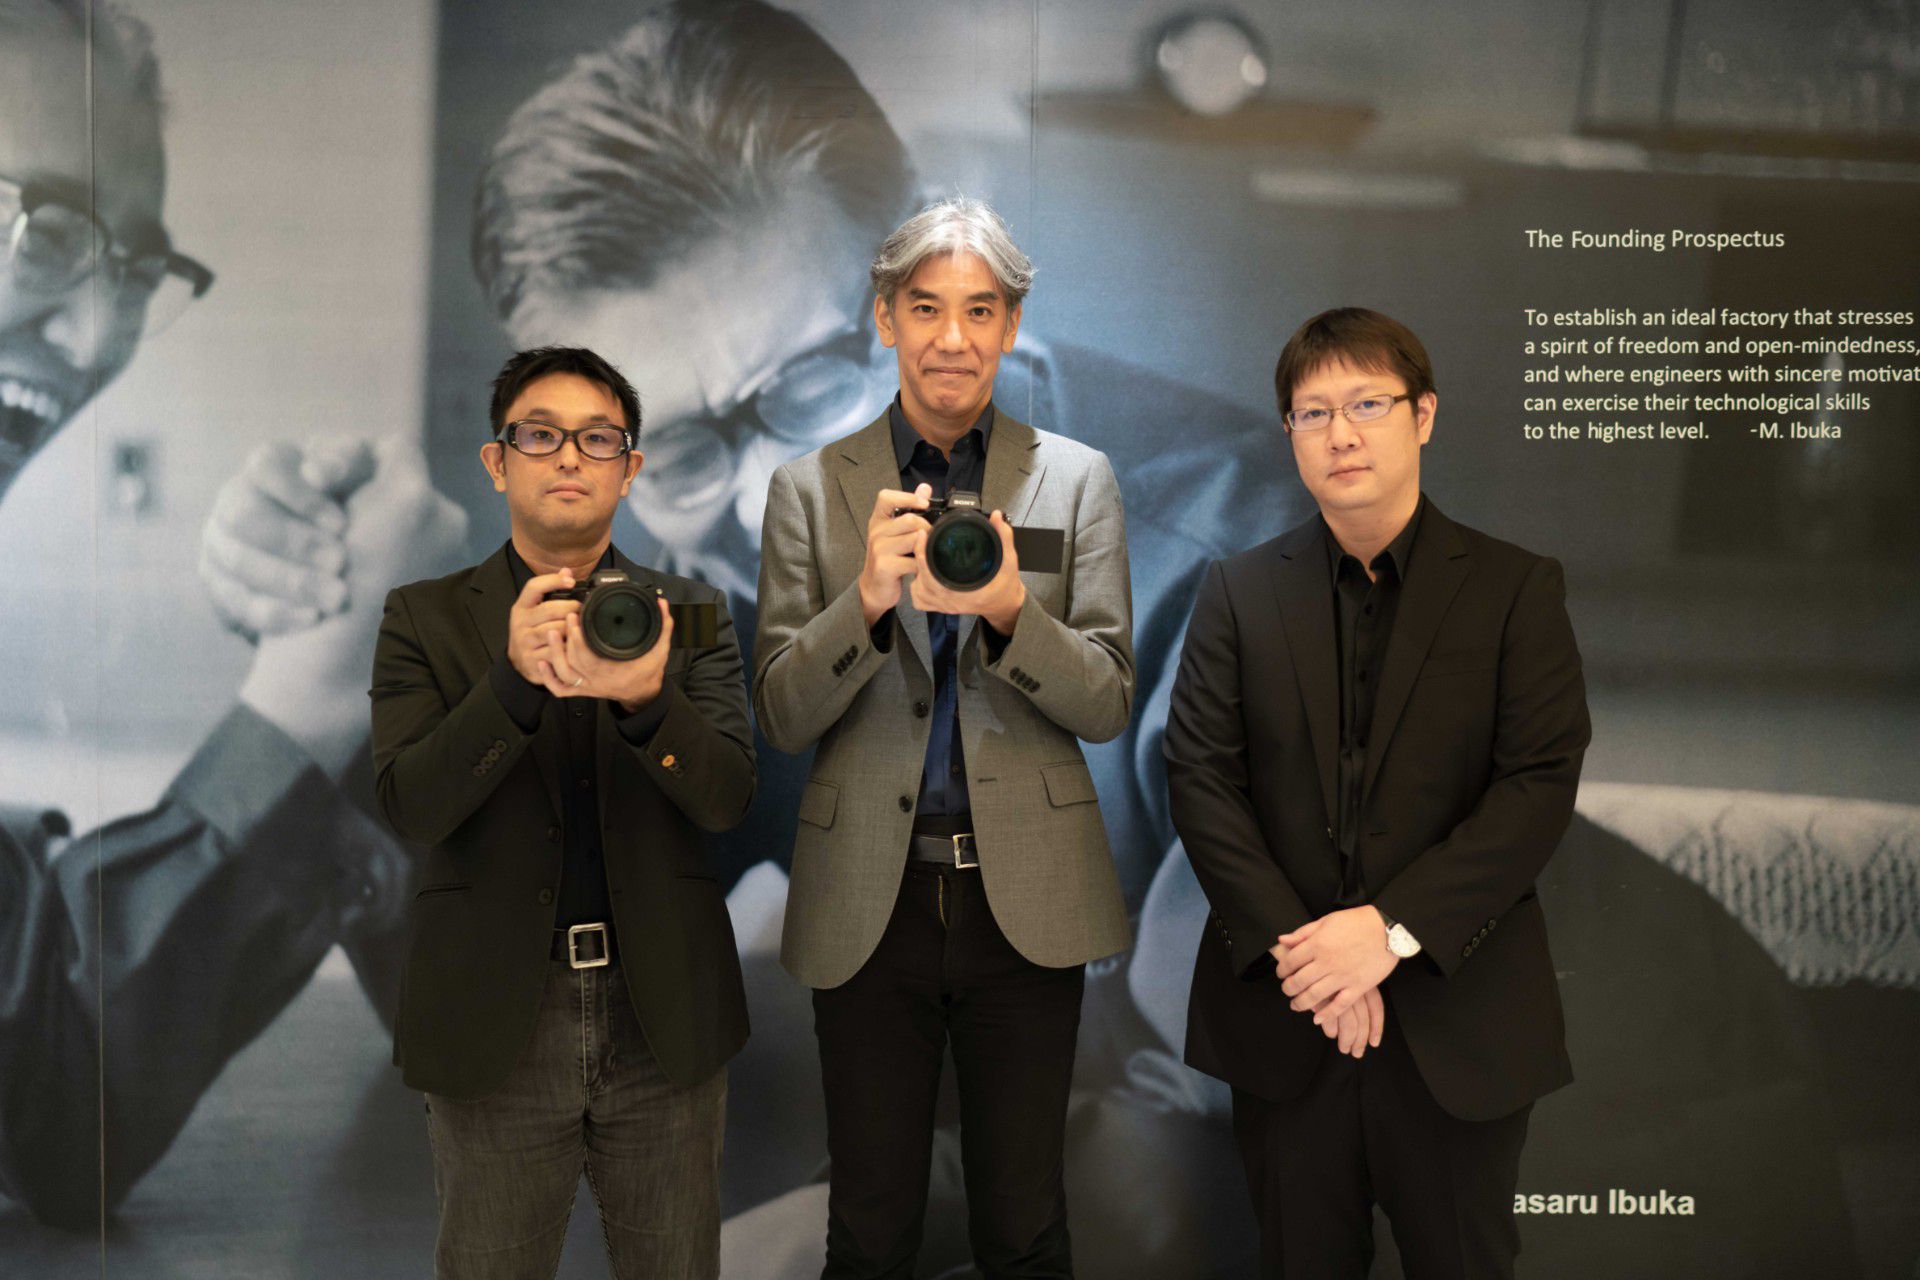 Dari kiri ke kanan: Koji Sekiguchi - Marketing Director Sony Indonesia, Kazuteru Makiyama - President Director PT Sony Indonesia, Takatsugu Yamamoto - Head of Product Marketing Digital Imaging Sony Indonesia